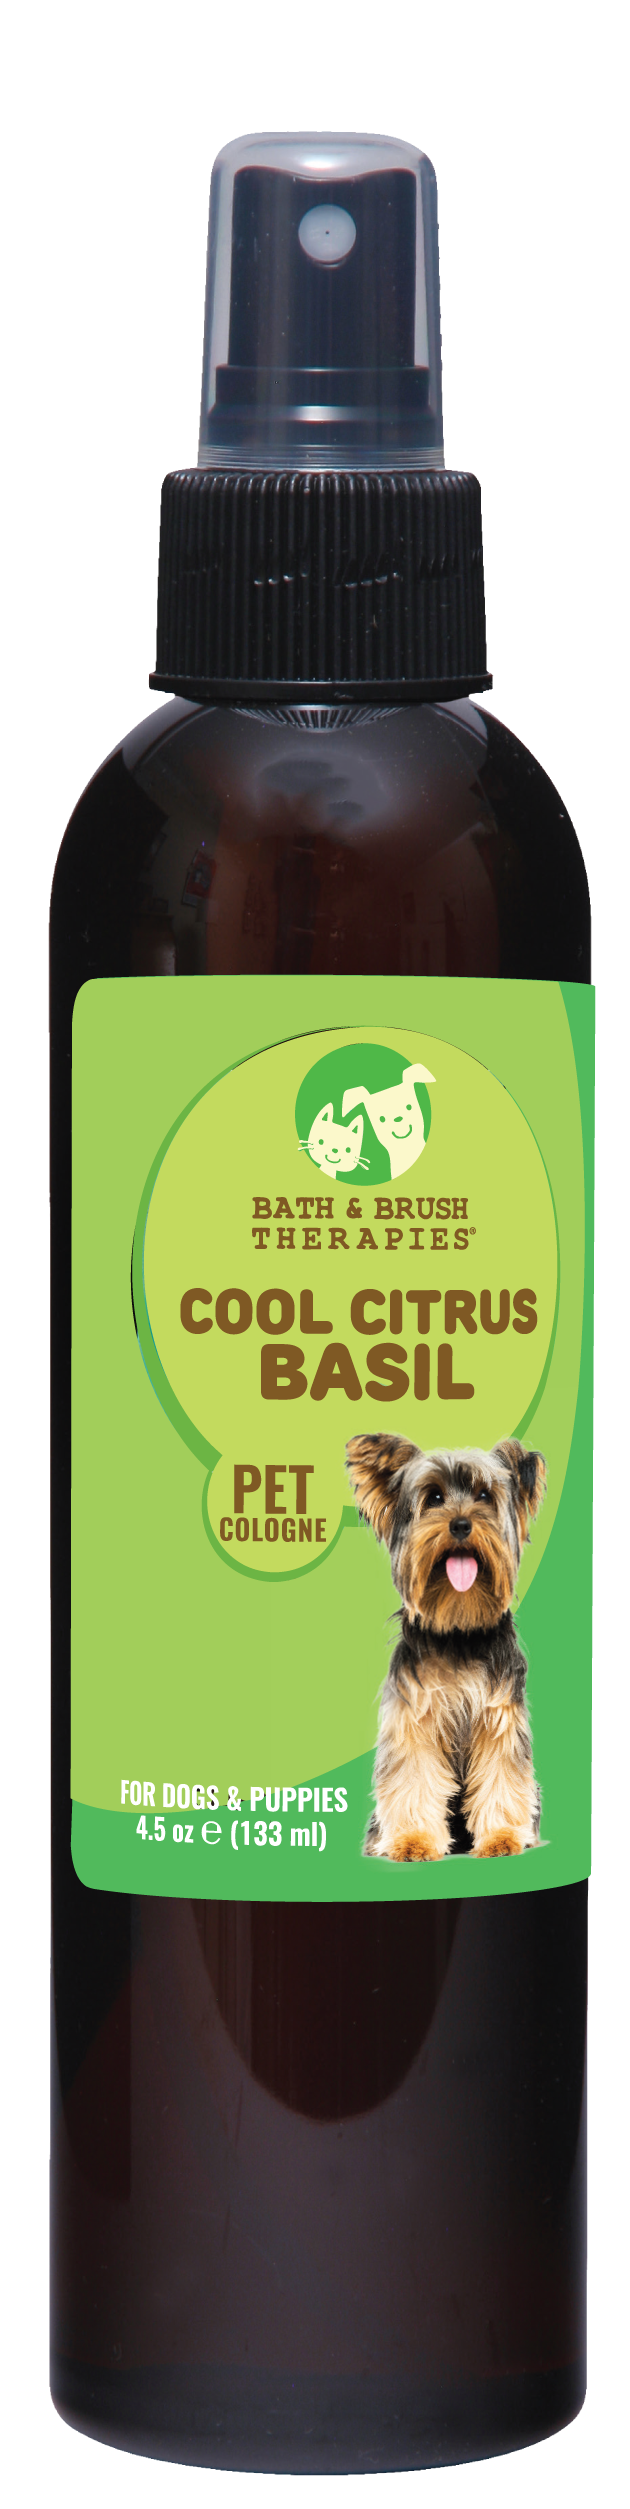 Cool Citrus Basil Pet Cologne | Bath & Brush Therapies®